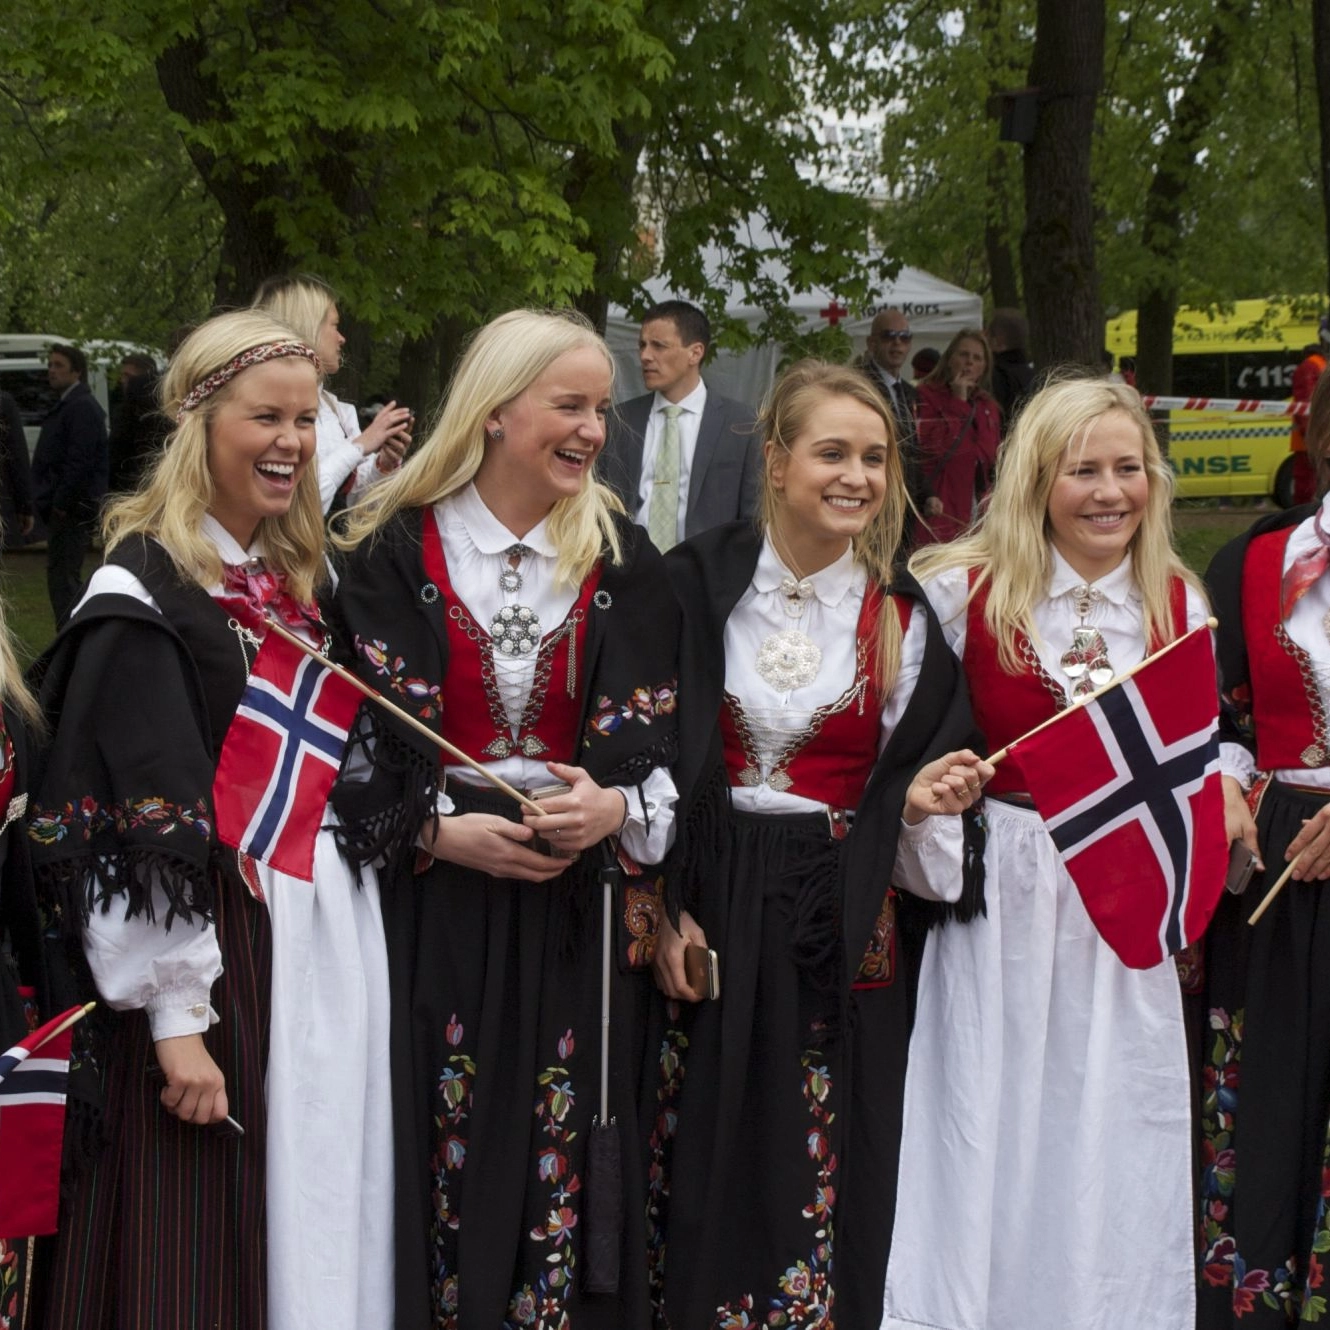 Norwegian national suit "Bunad" - 17. May in Norway